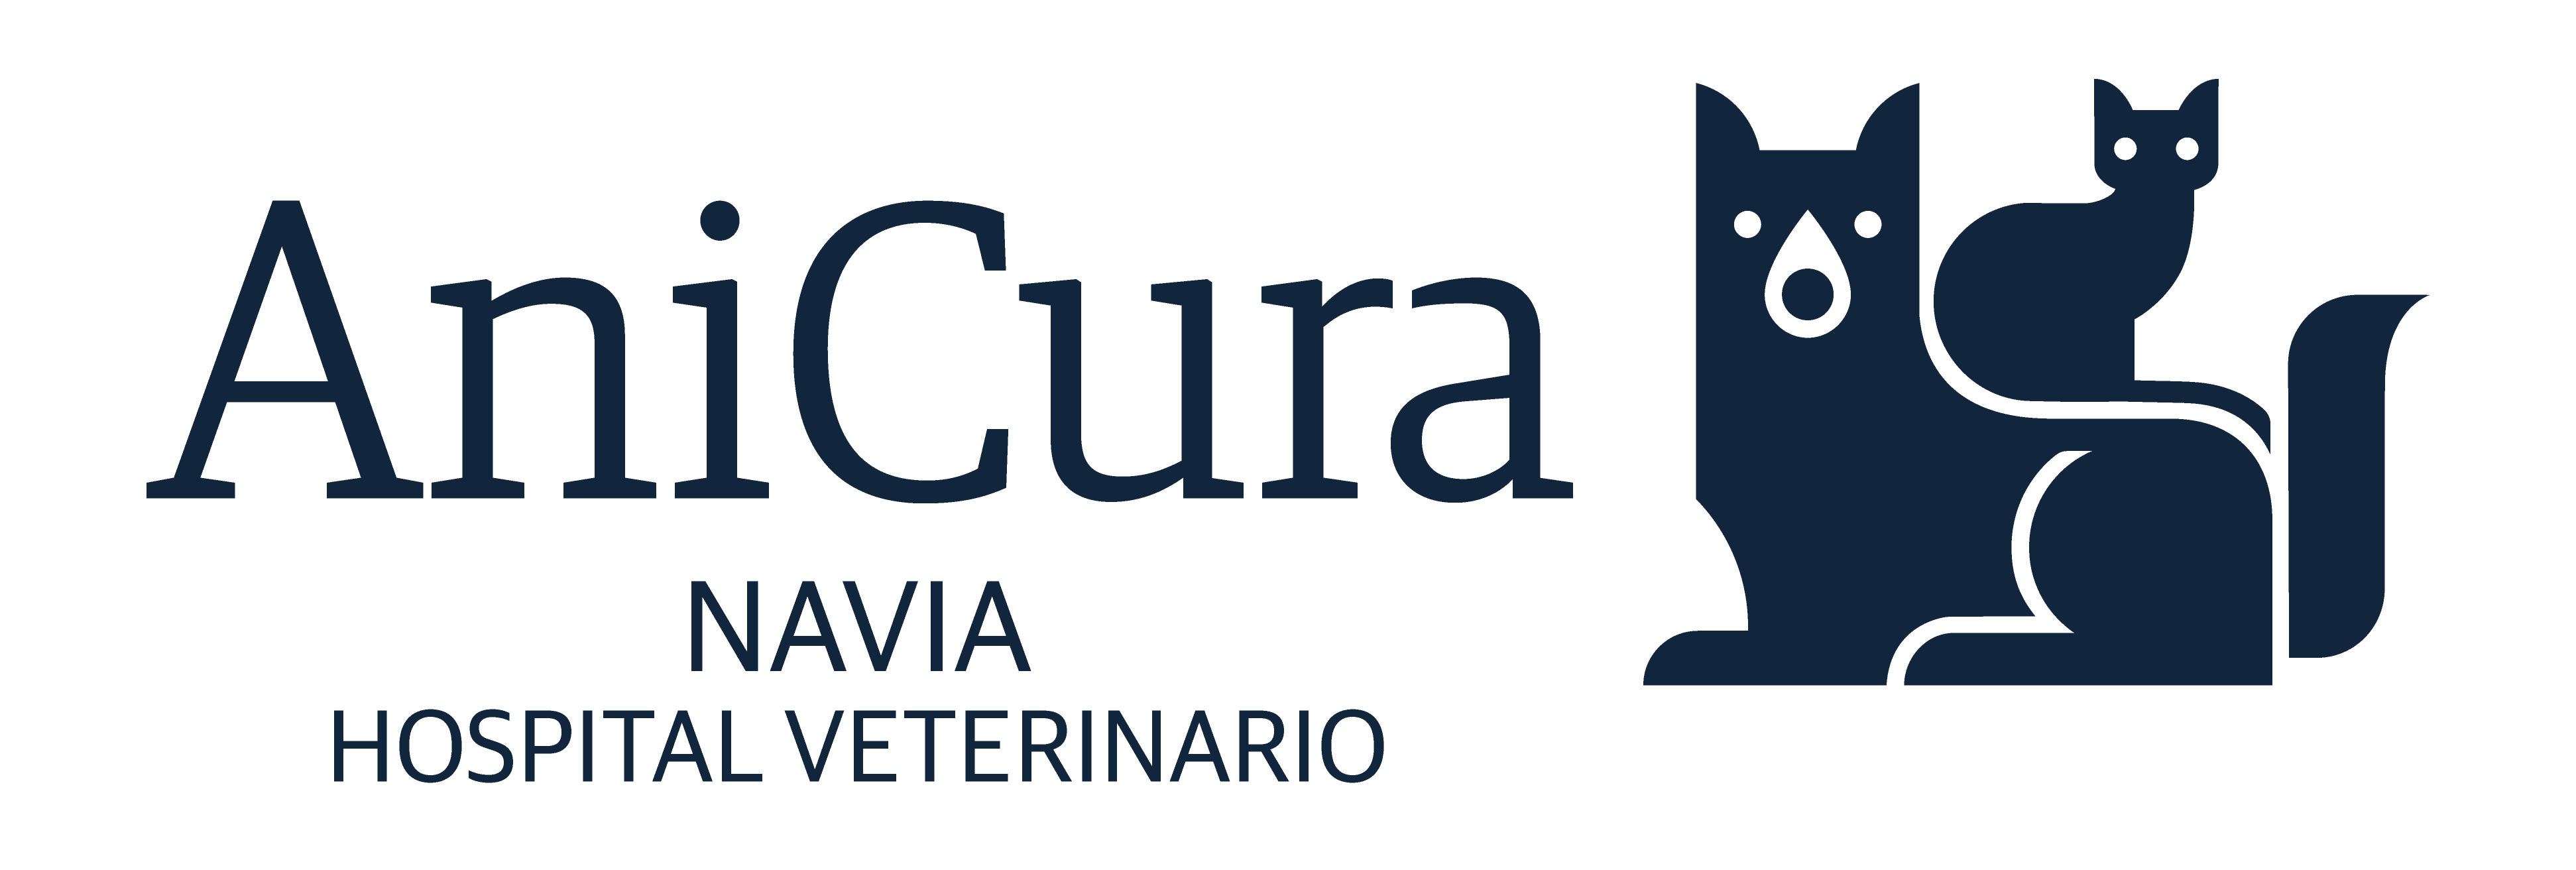 AniCura Navia Hospital Veterinario logo